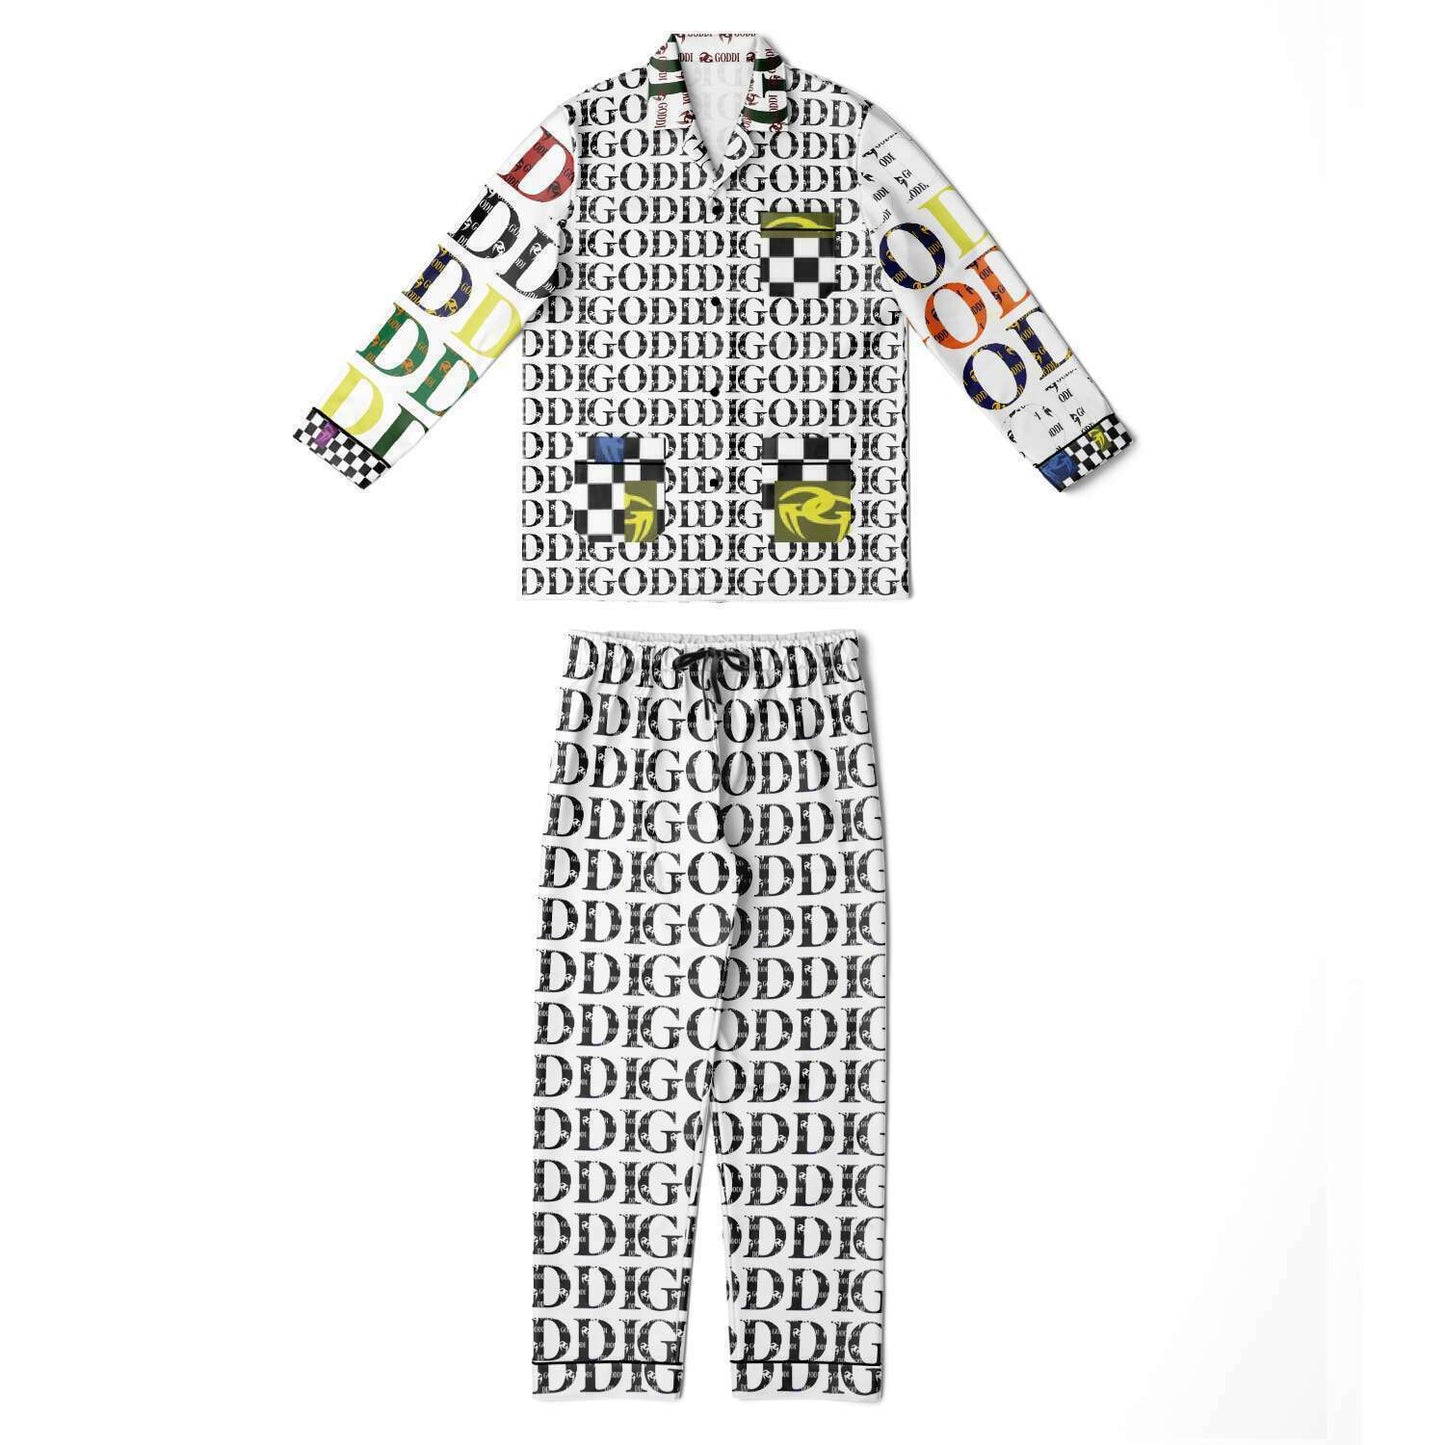 Men's GG Logo Print Satin Pajamas  2pc, M  $90.10 GODDI